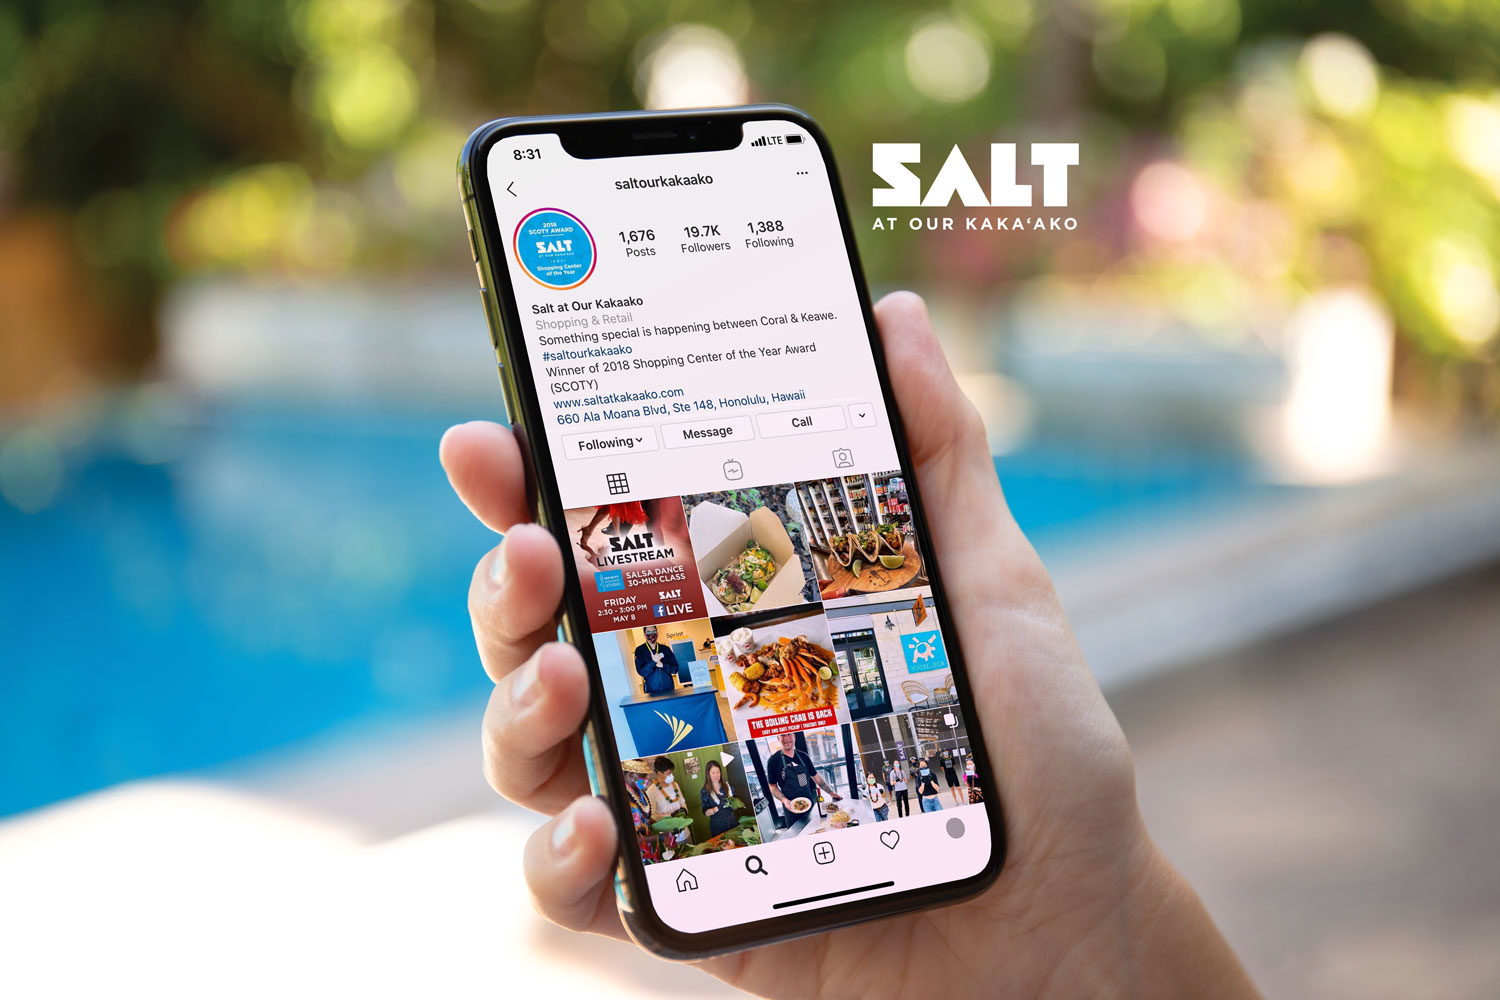 SALT at Our Kaka'ako Social Media feed on mobile device